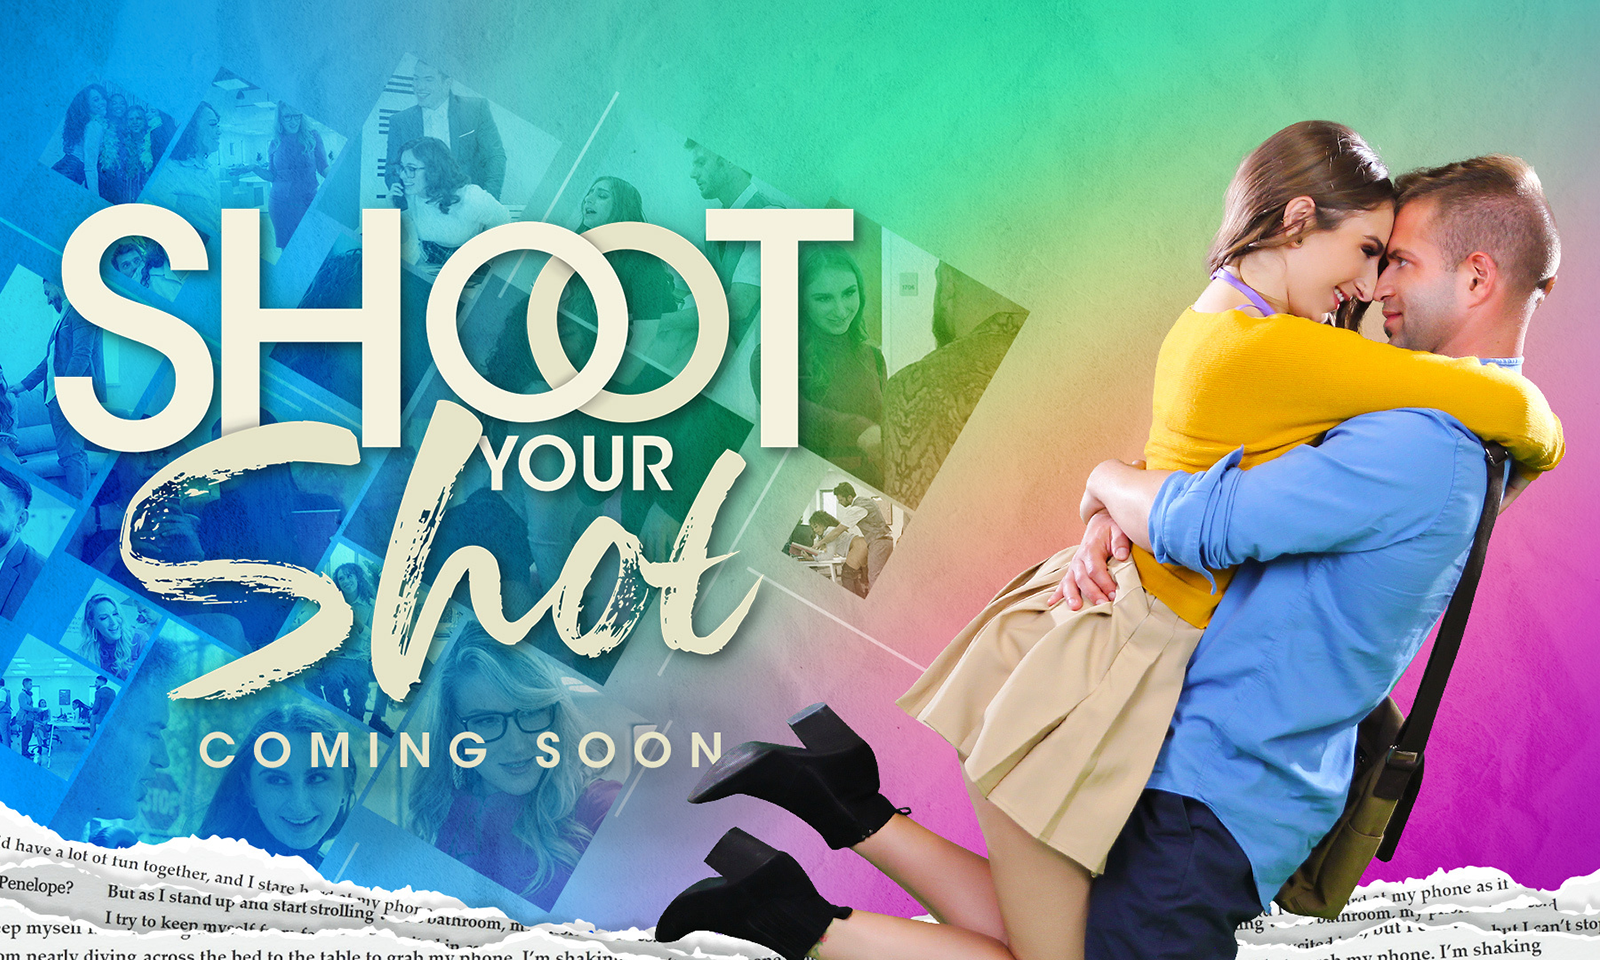 Team Skeet to Release Cross-Series Feature 'Shoot Your Shot'